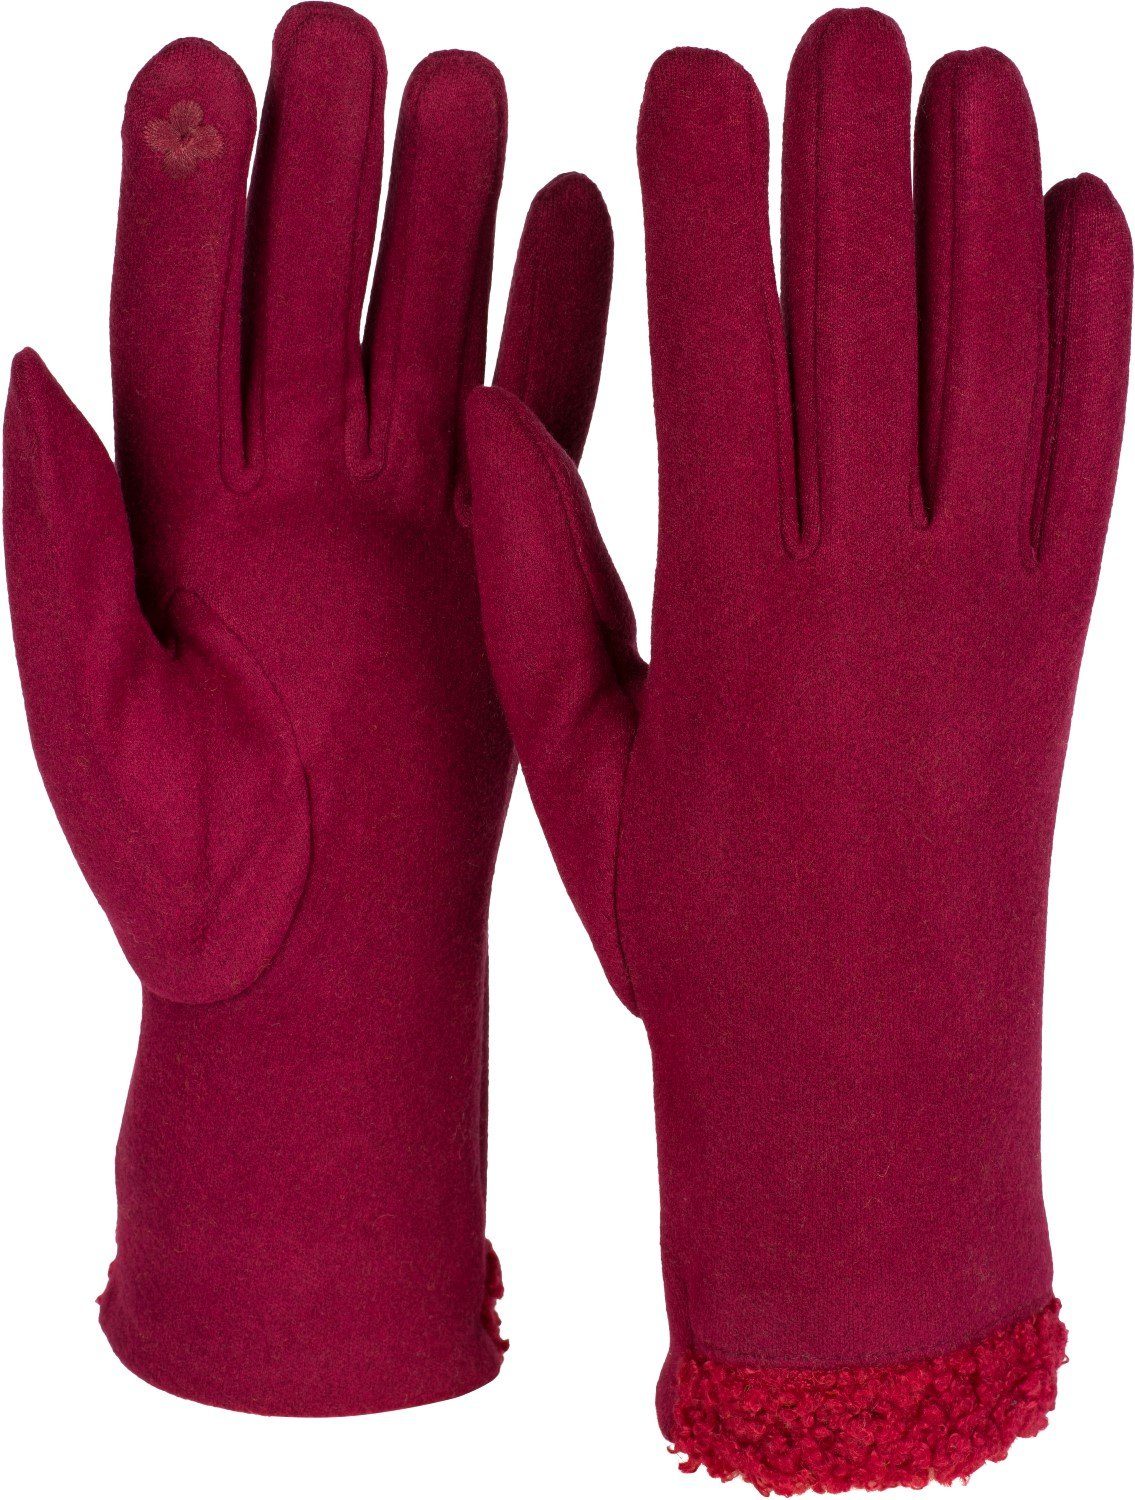 styleBREAKER Fleecehandschuhe Touchscreen Handschuhe Teddyfell Bordeaux-Rot